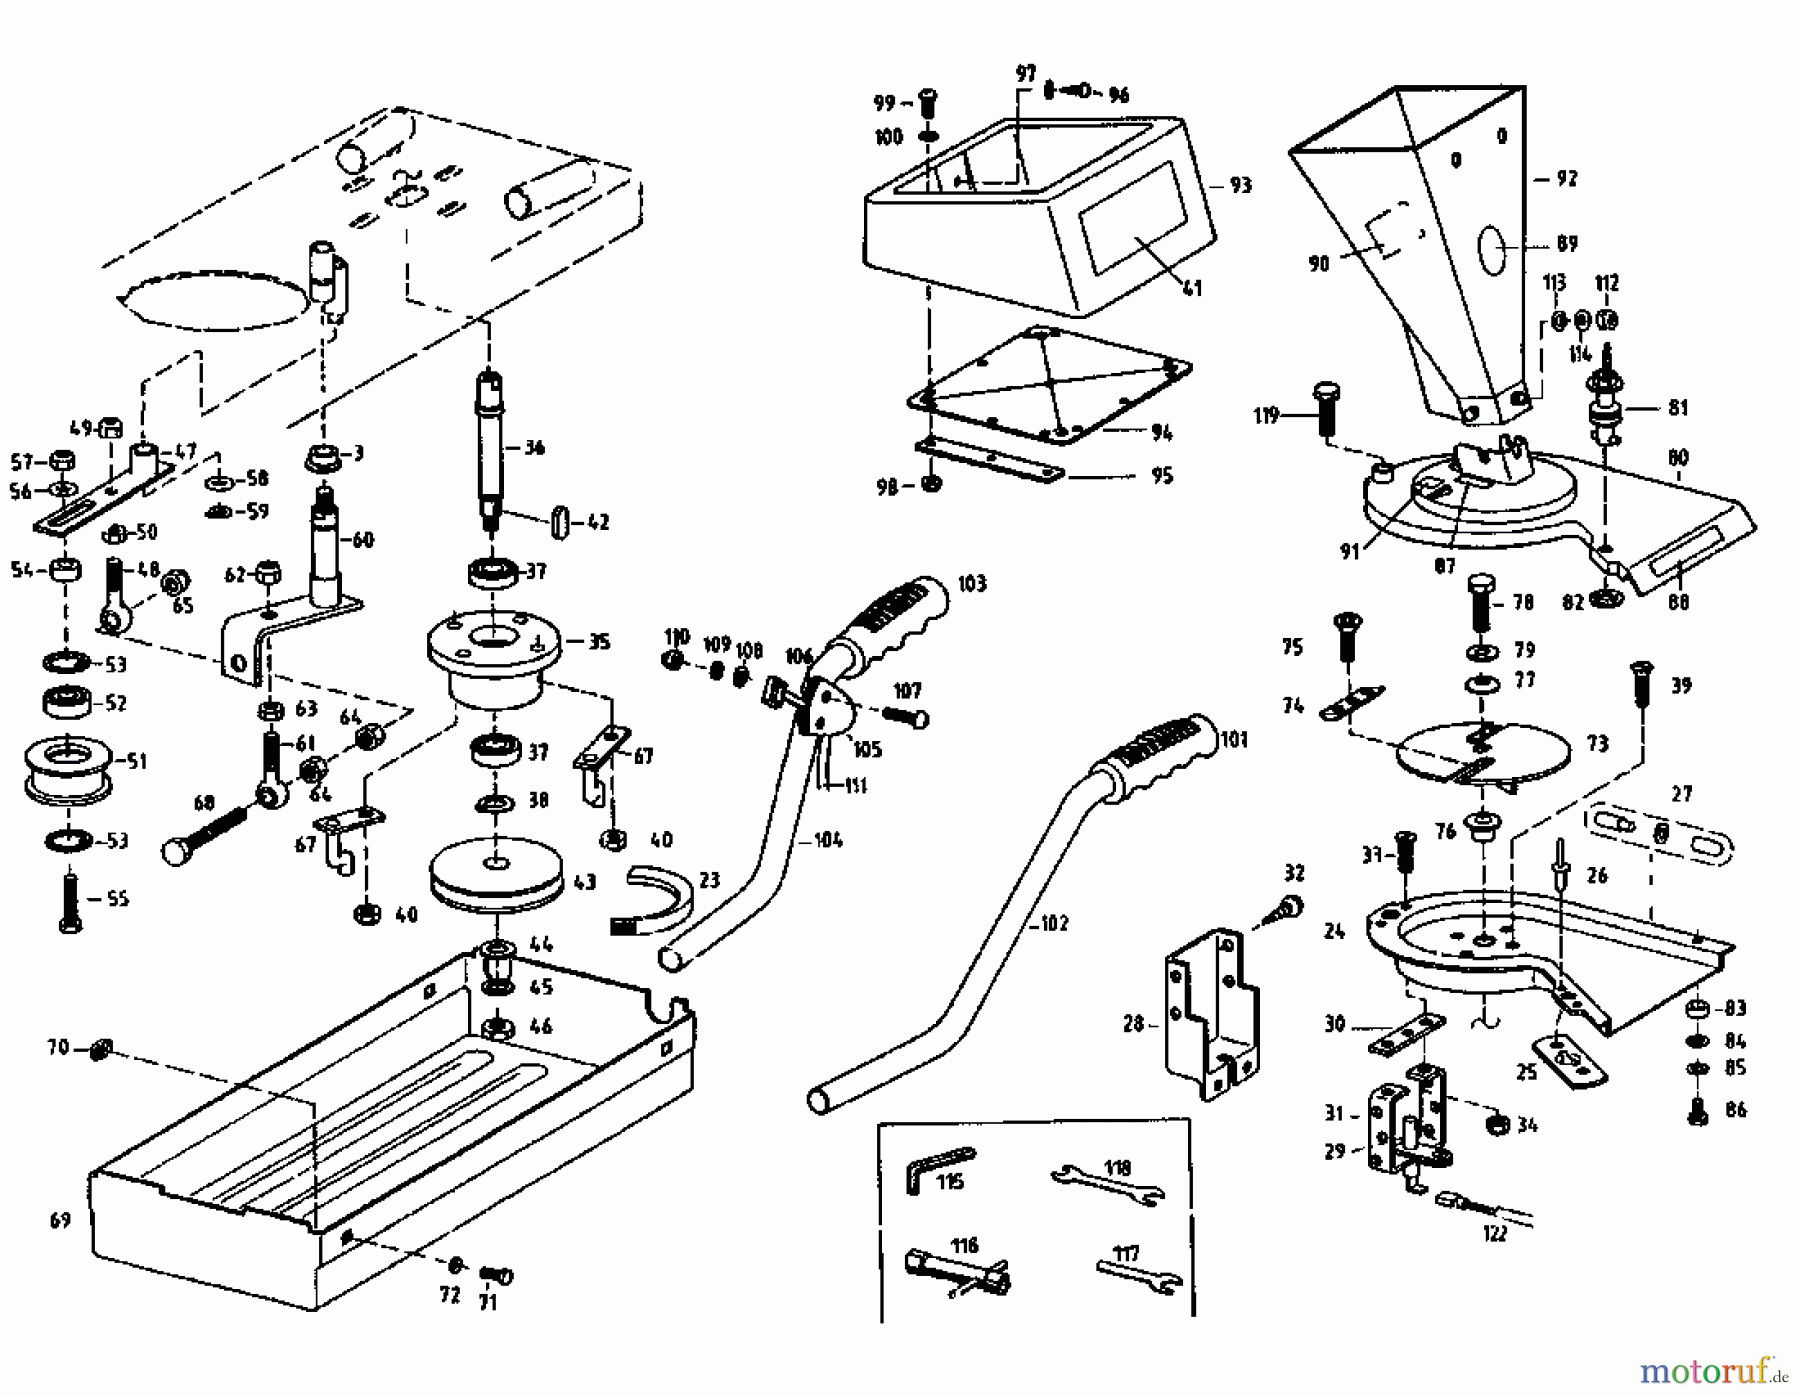  Gutbrod Chipper GAB 35 04003.03  (1994) Basic machine